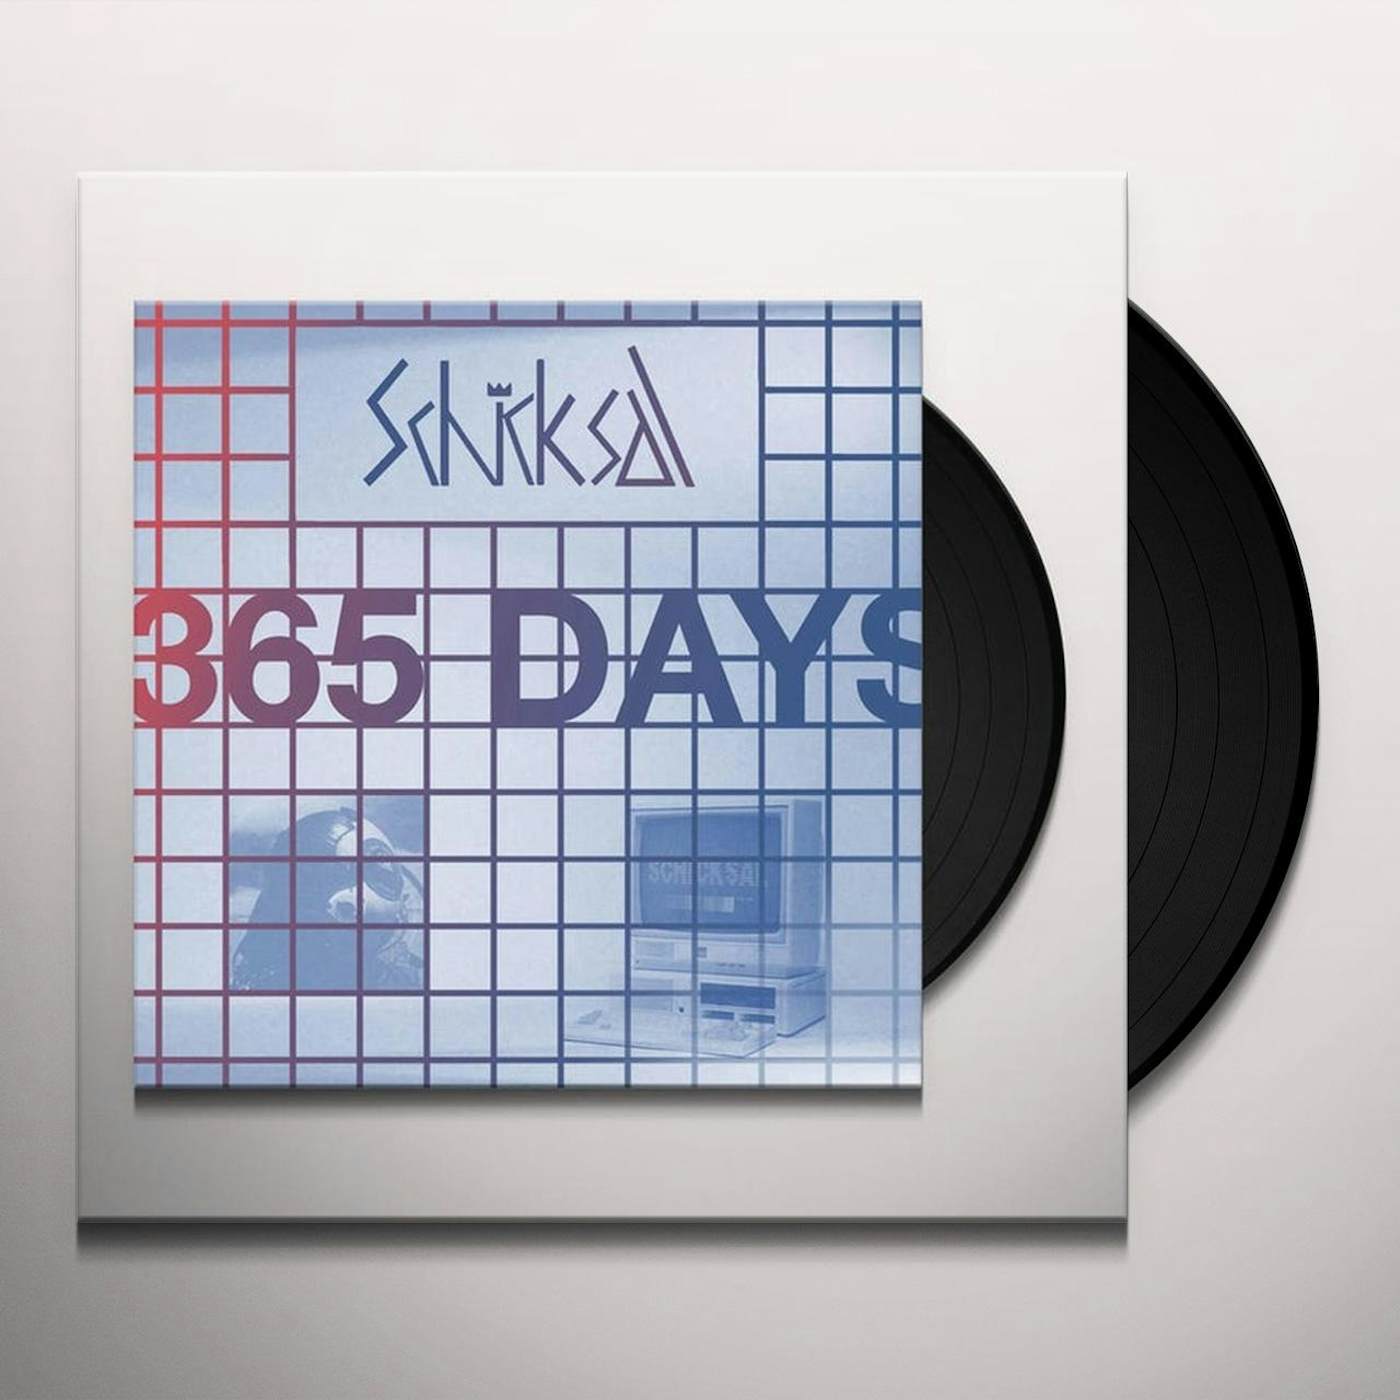 Schicksal 365 DAYS Vinyl Record